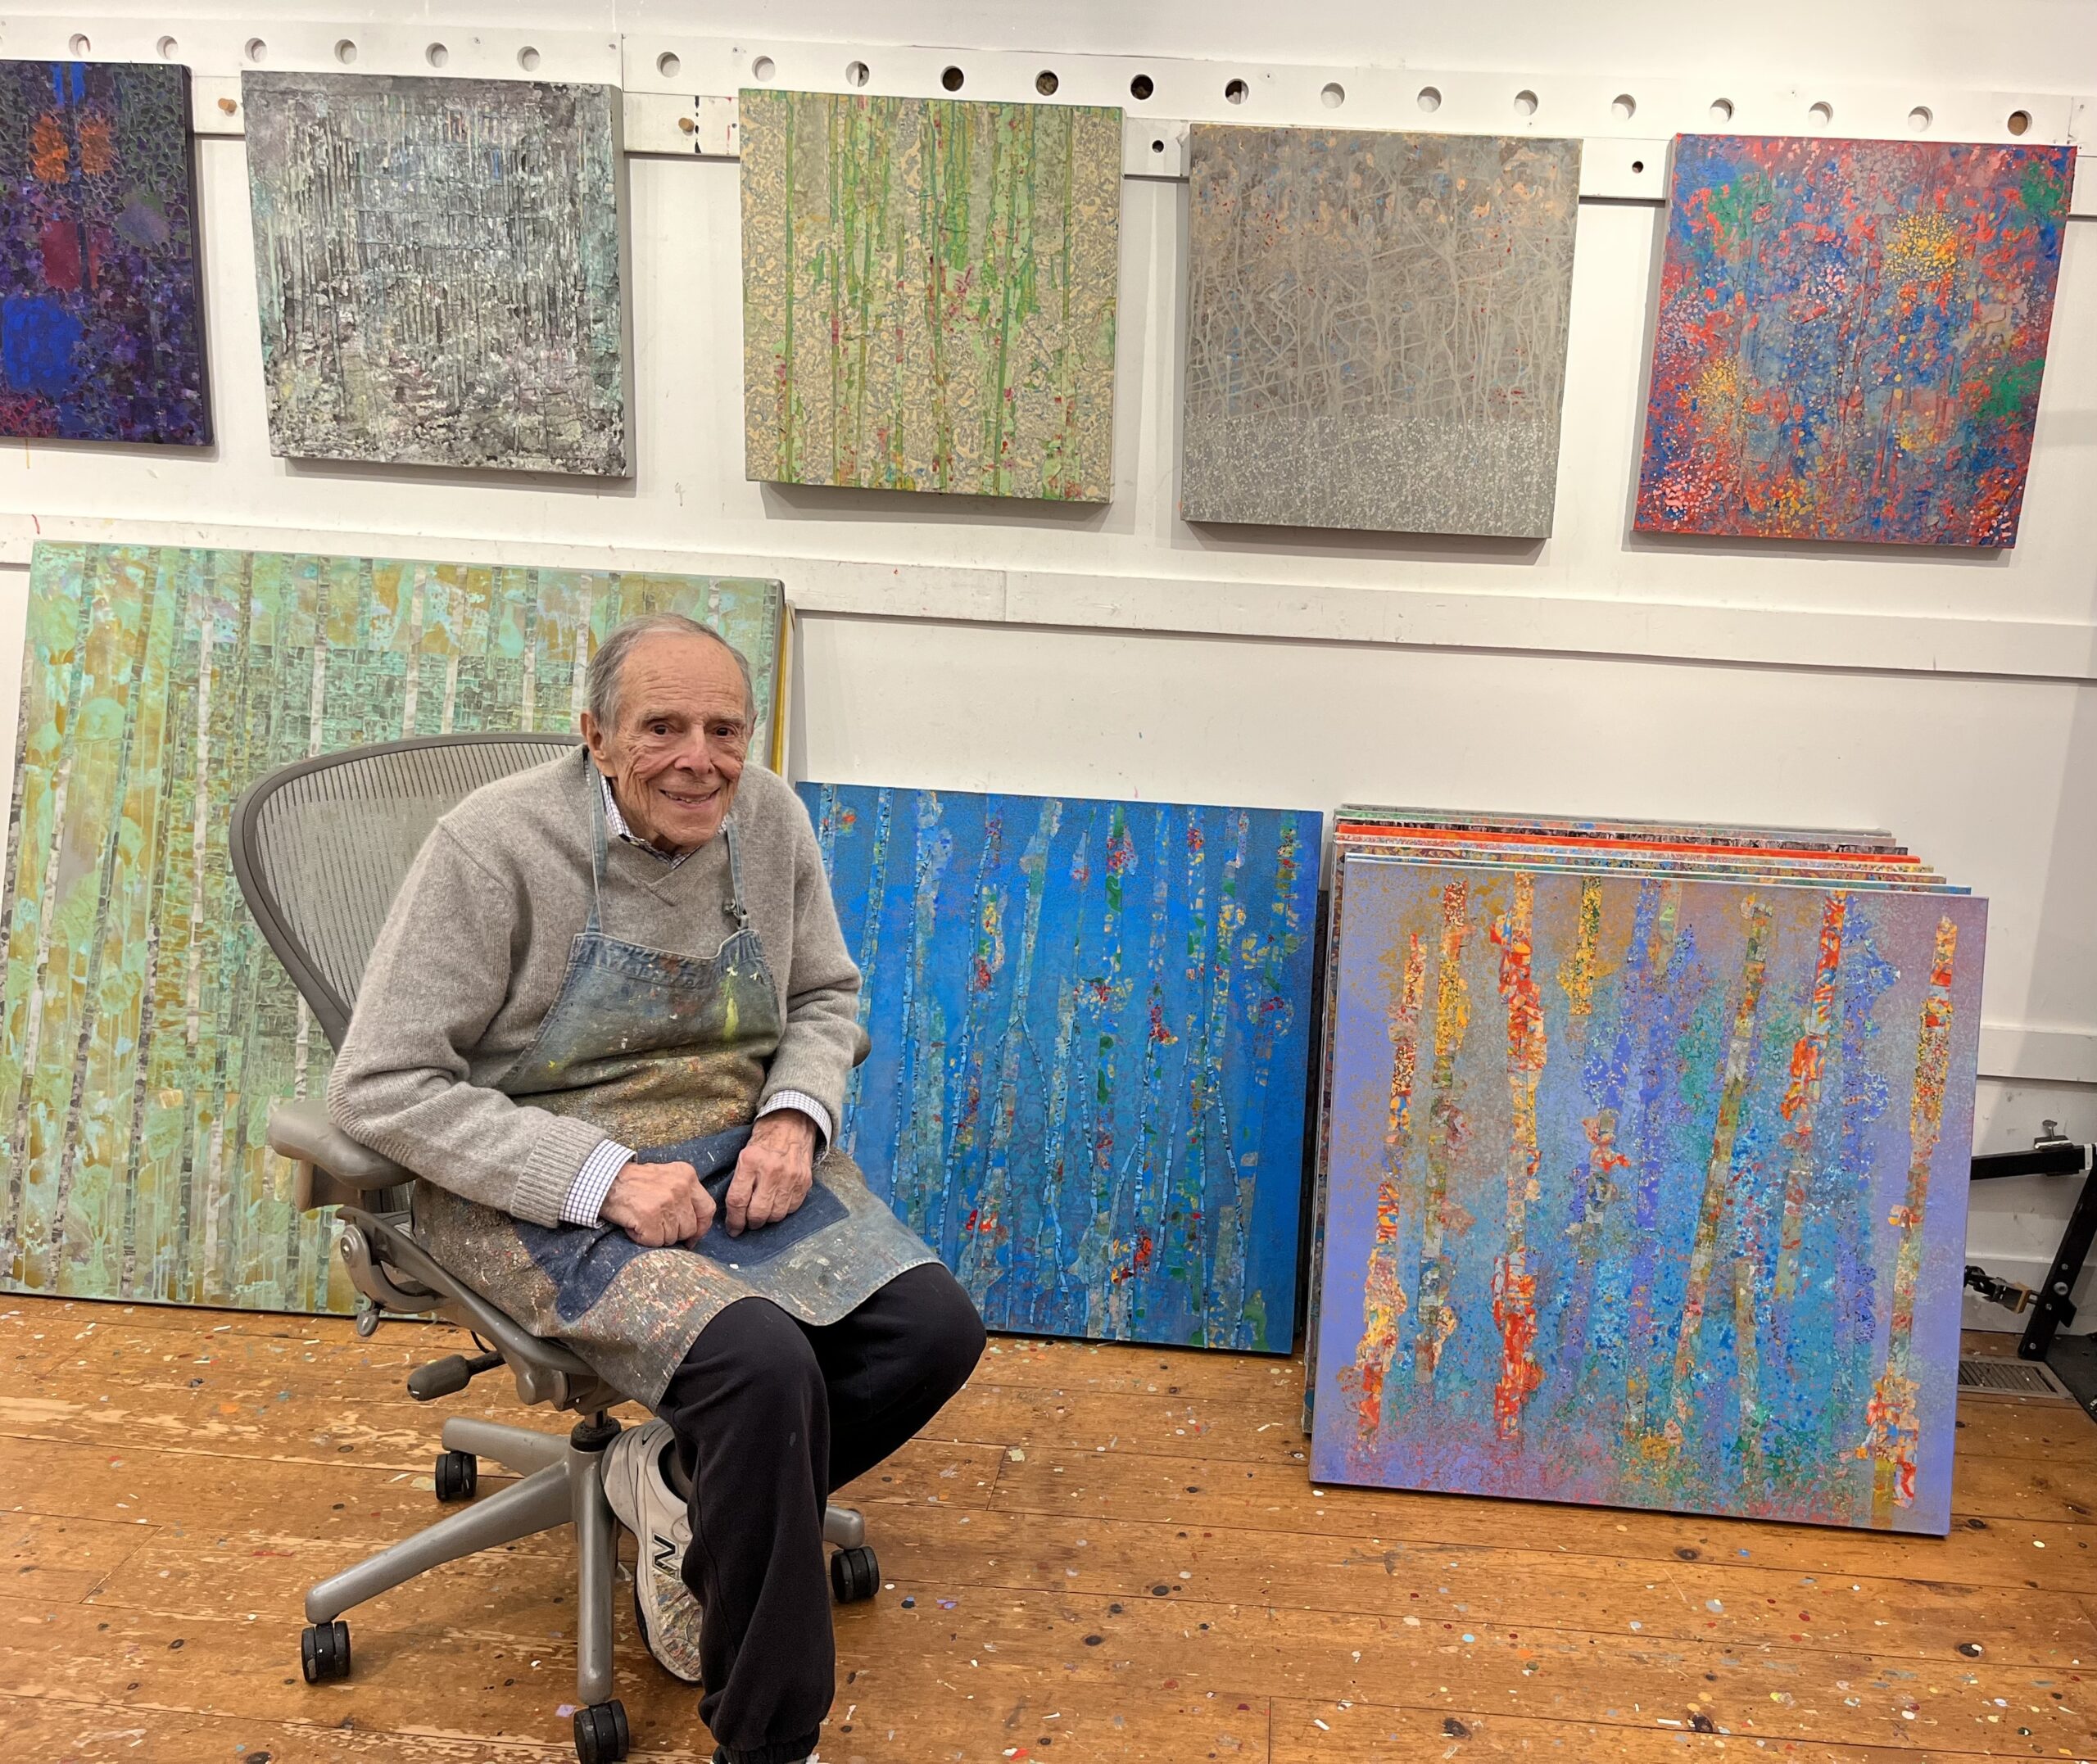 Hector Leonardi in his Bridgehampton studio. COURTESY THE ARTIST